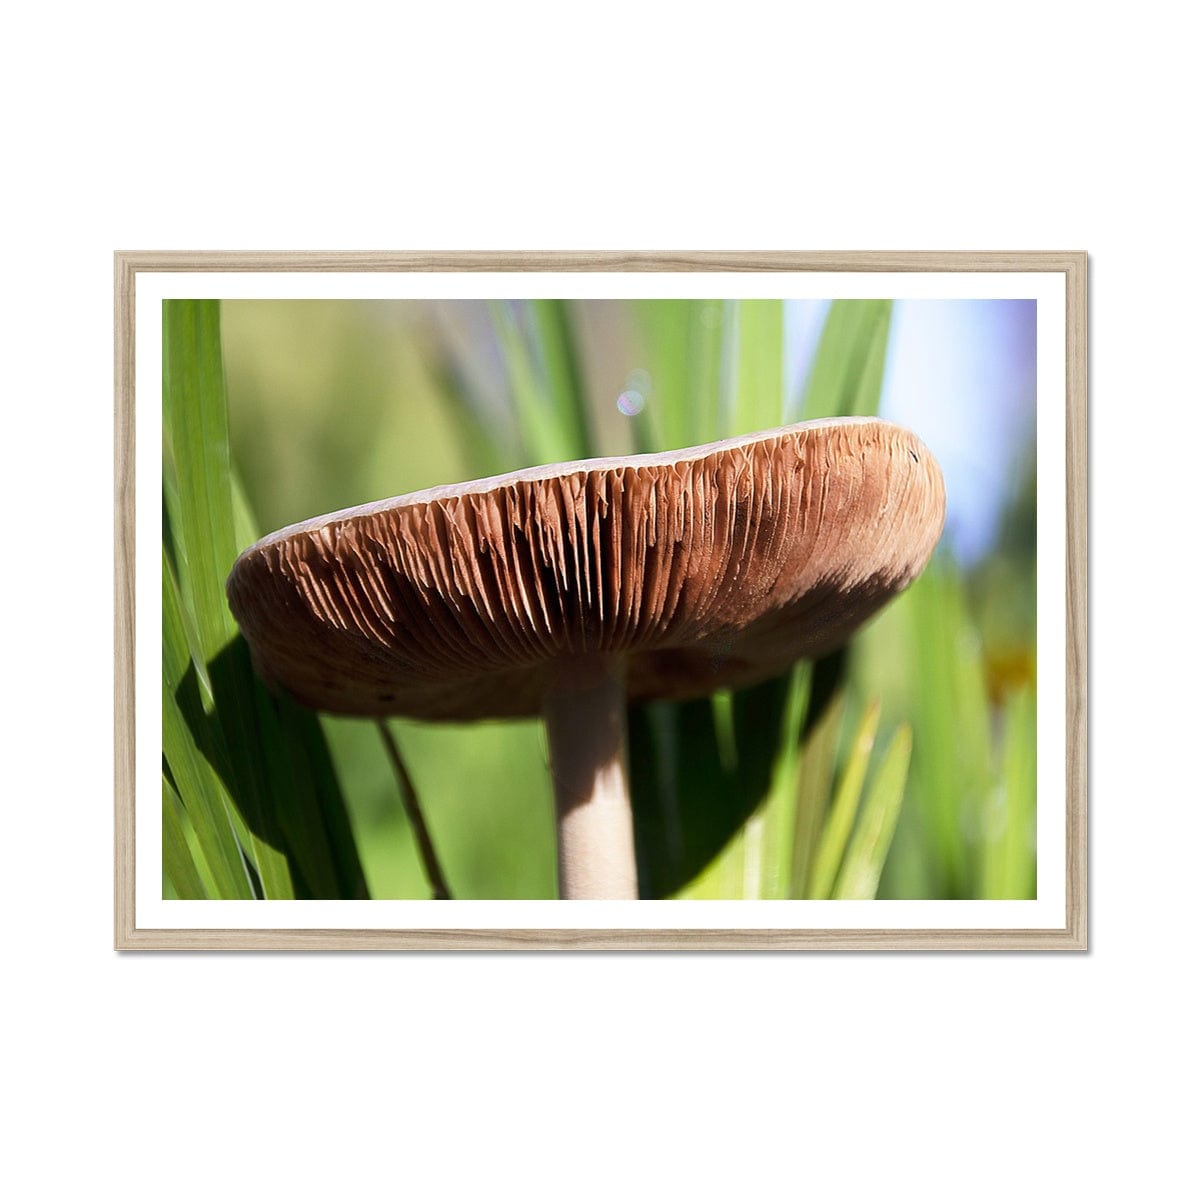 Seek & Ramble Framed 16"x12" (40.64 x 30.48cm) / Natural Frame Mushroom Print | Botanical Garden | Magic | Green | Brown | Fungi | Wall Decor | Framed Print